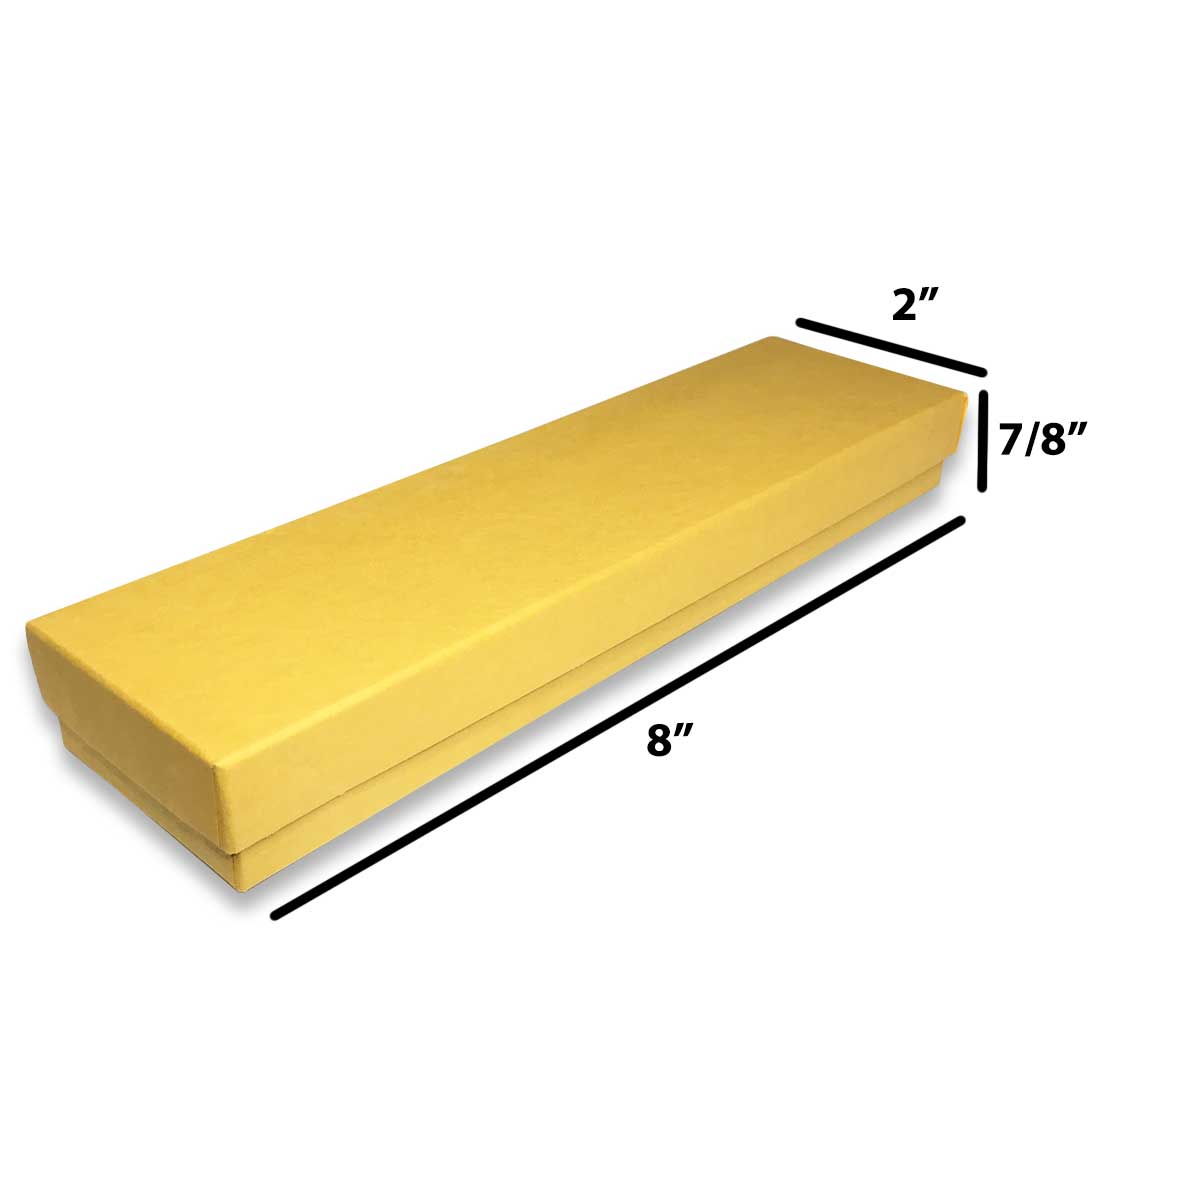 Yellow Kraft Cotton Filled Box 8" x 2" x 7/8"H